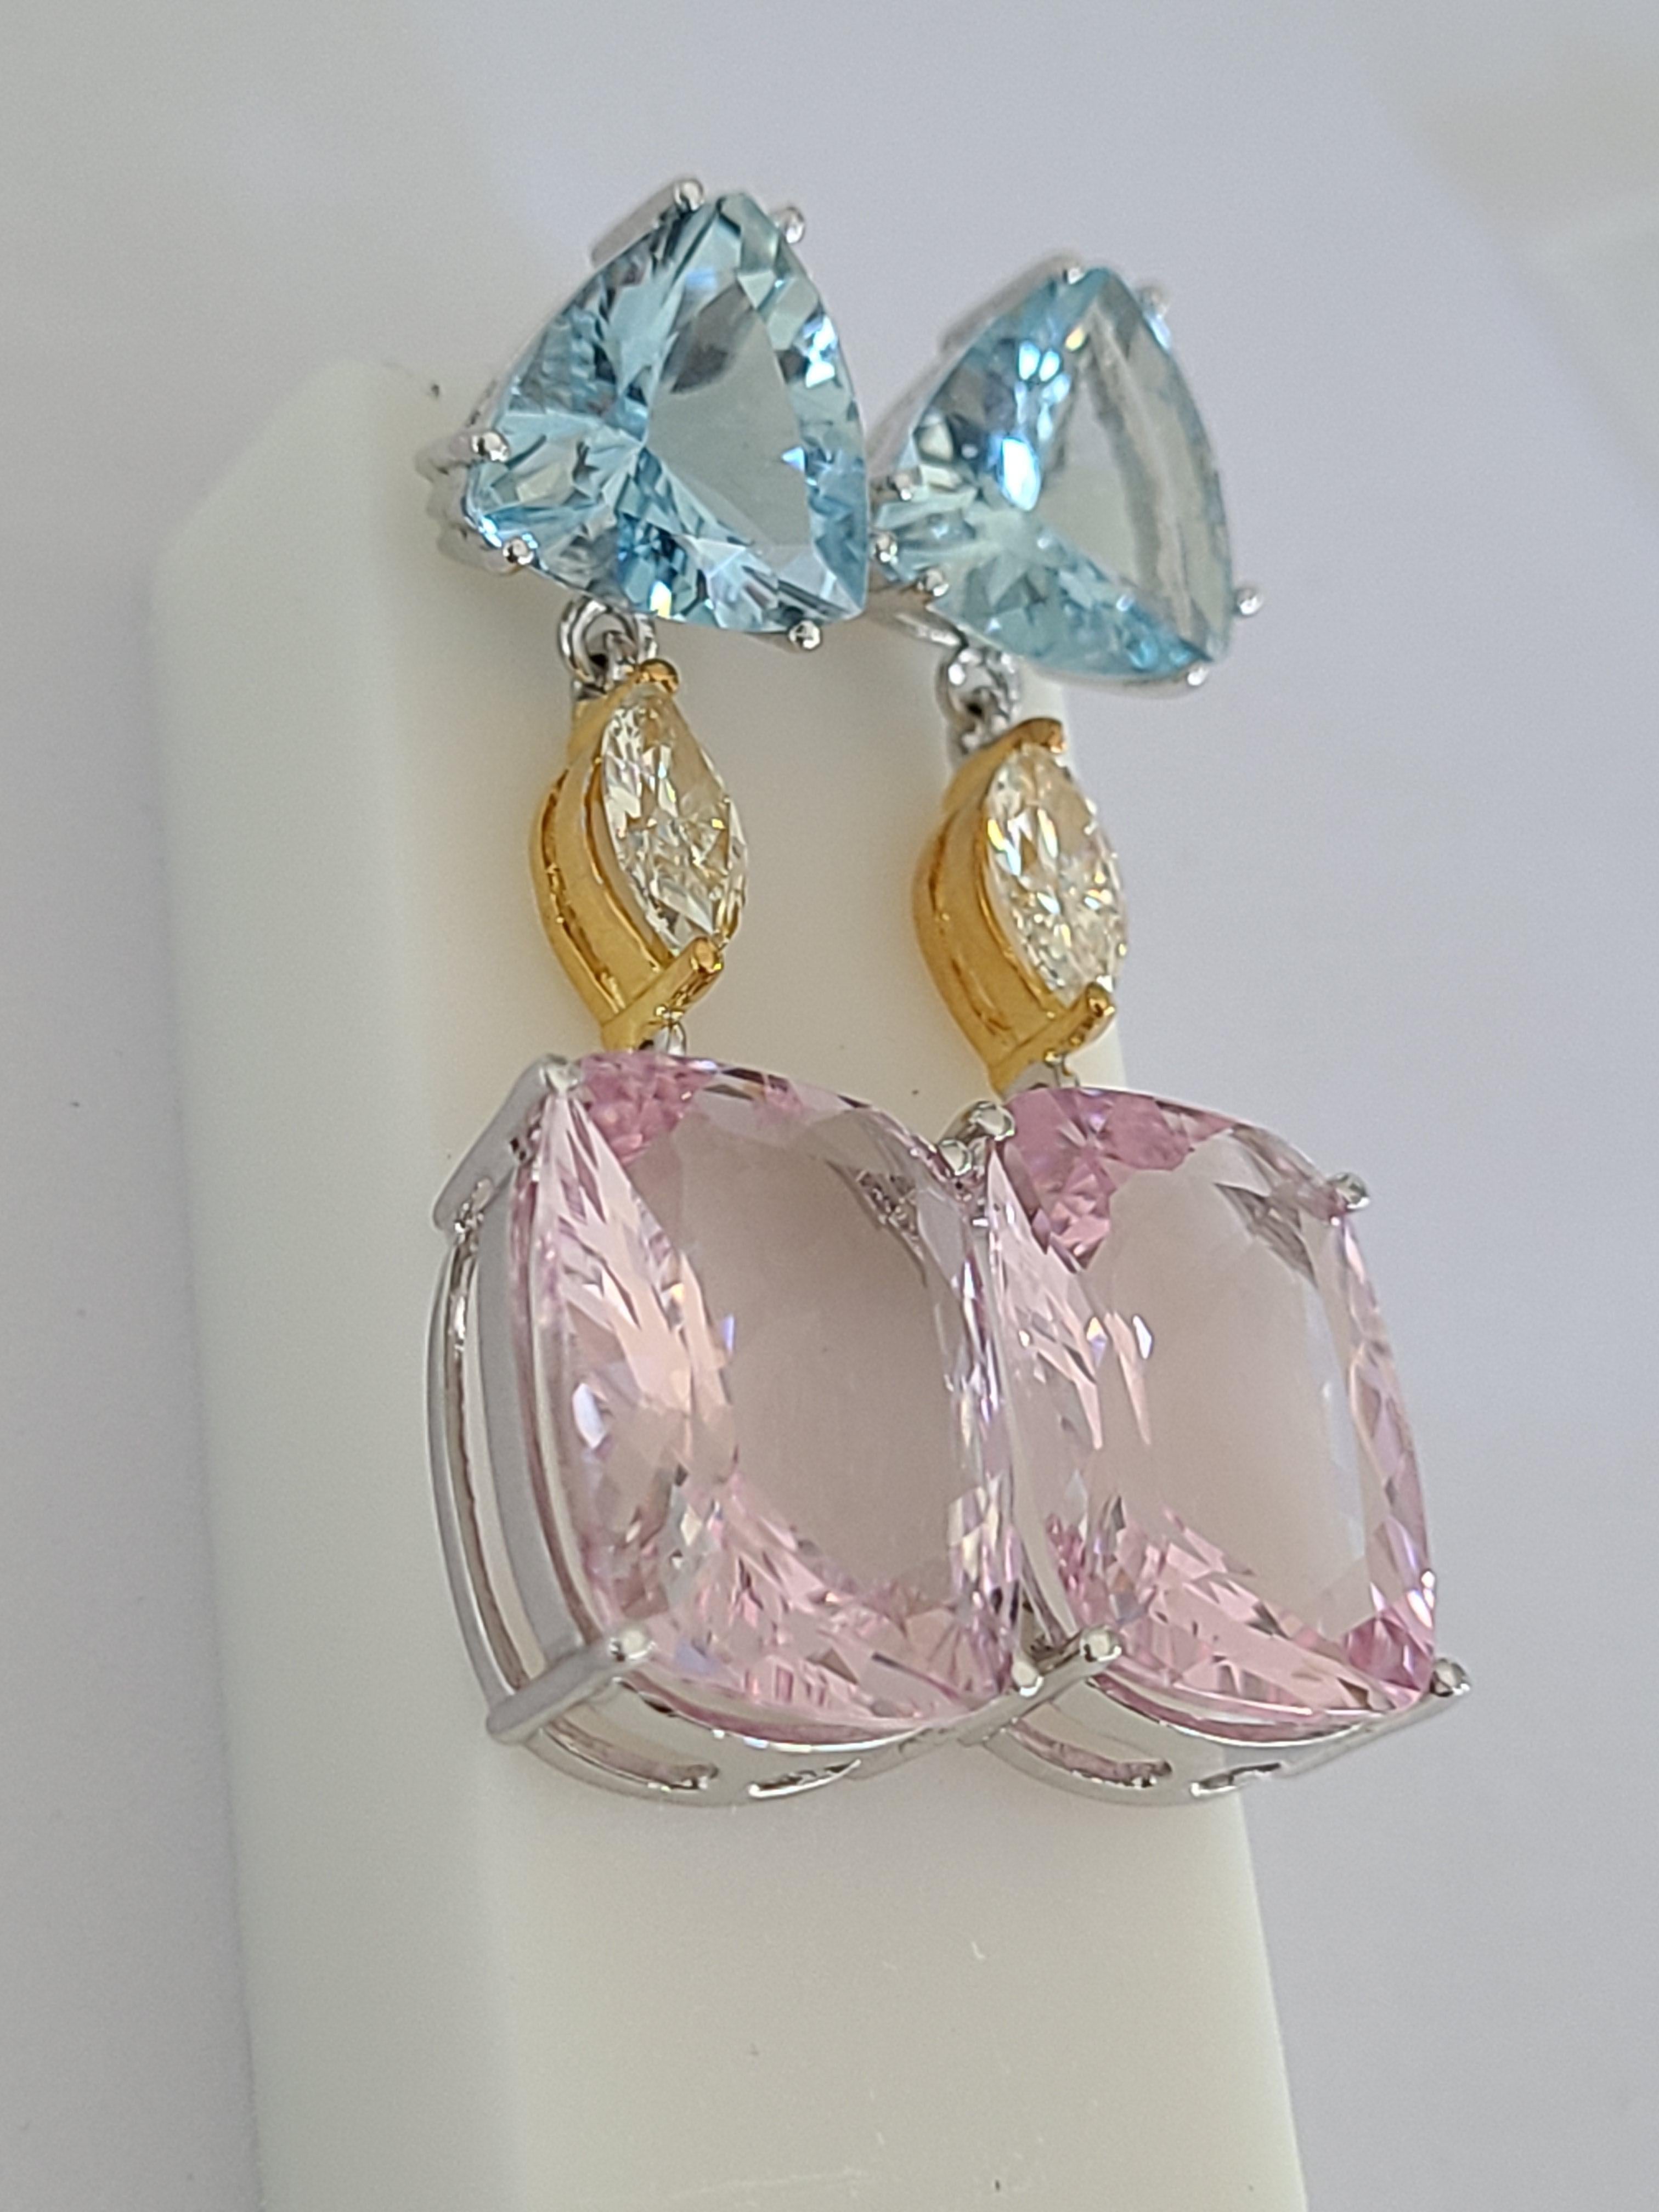 Trillion Cut Aquamarine and Morganite Earrings in 18 Karat Gold with Diamonds